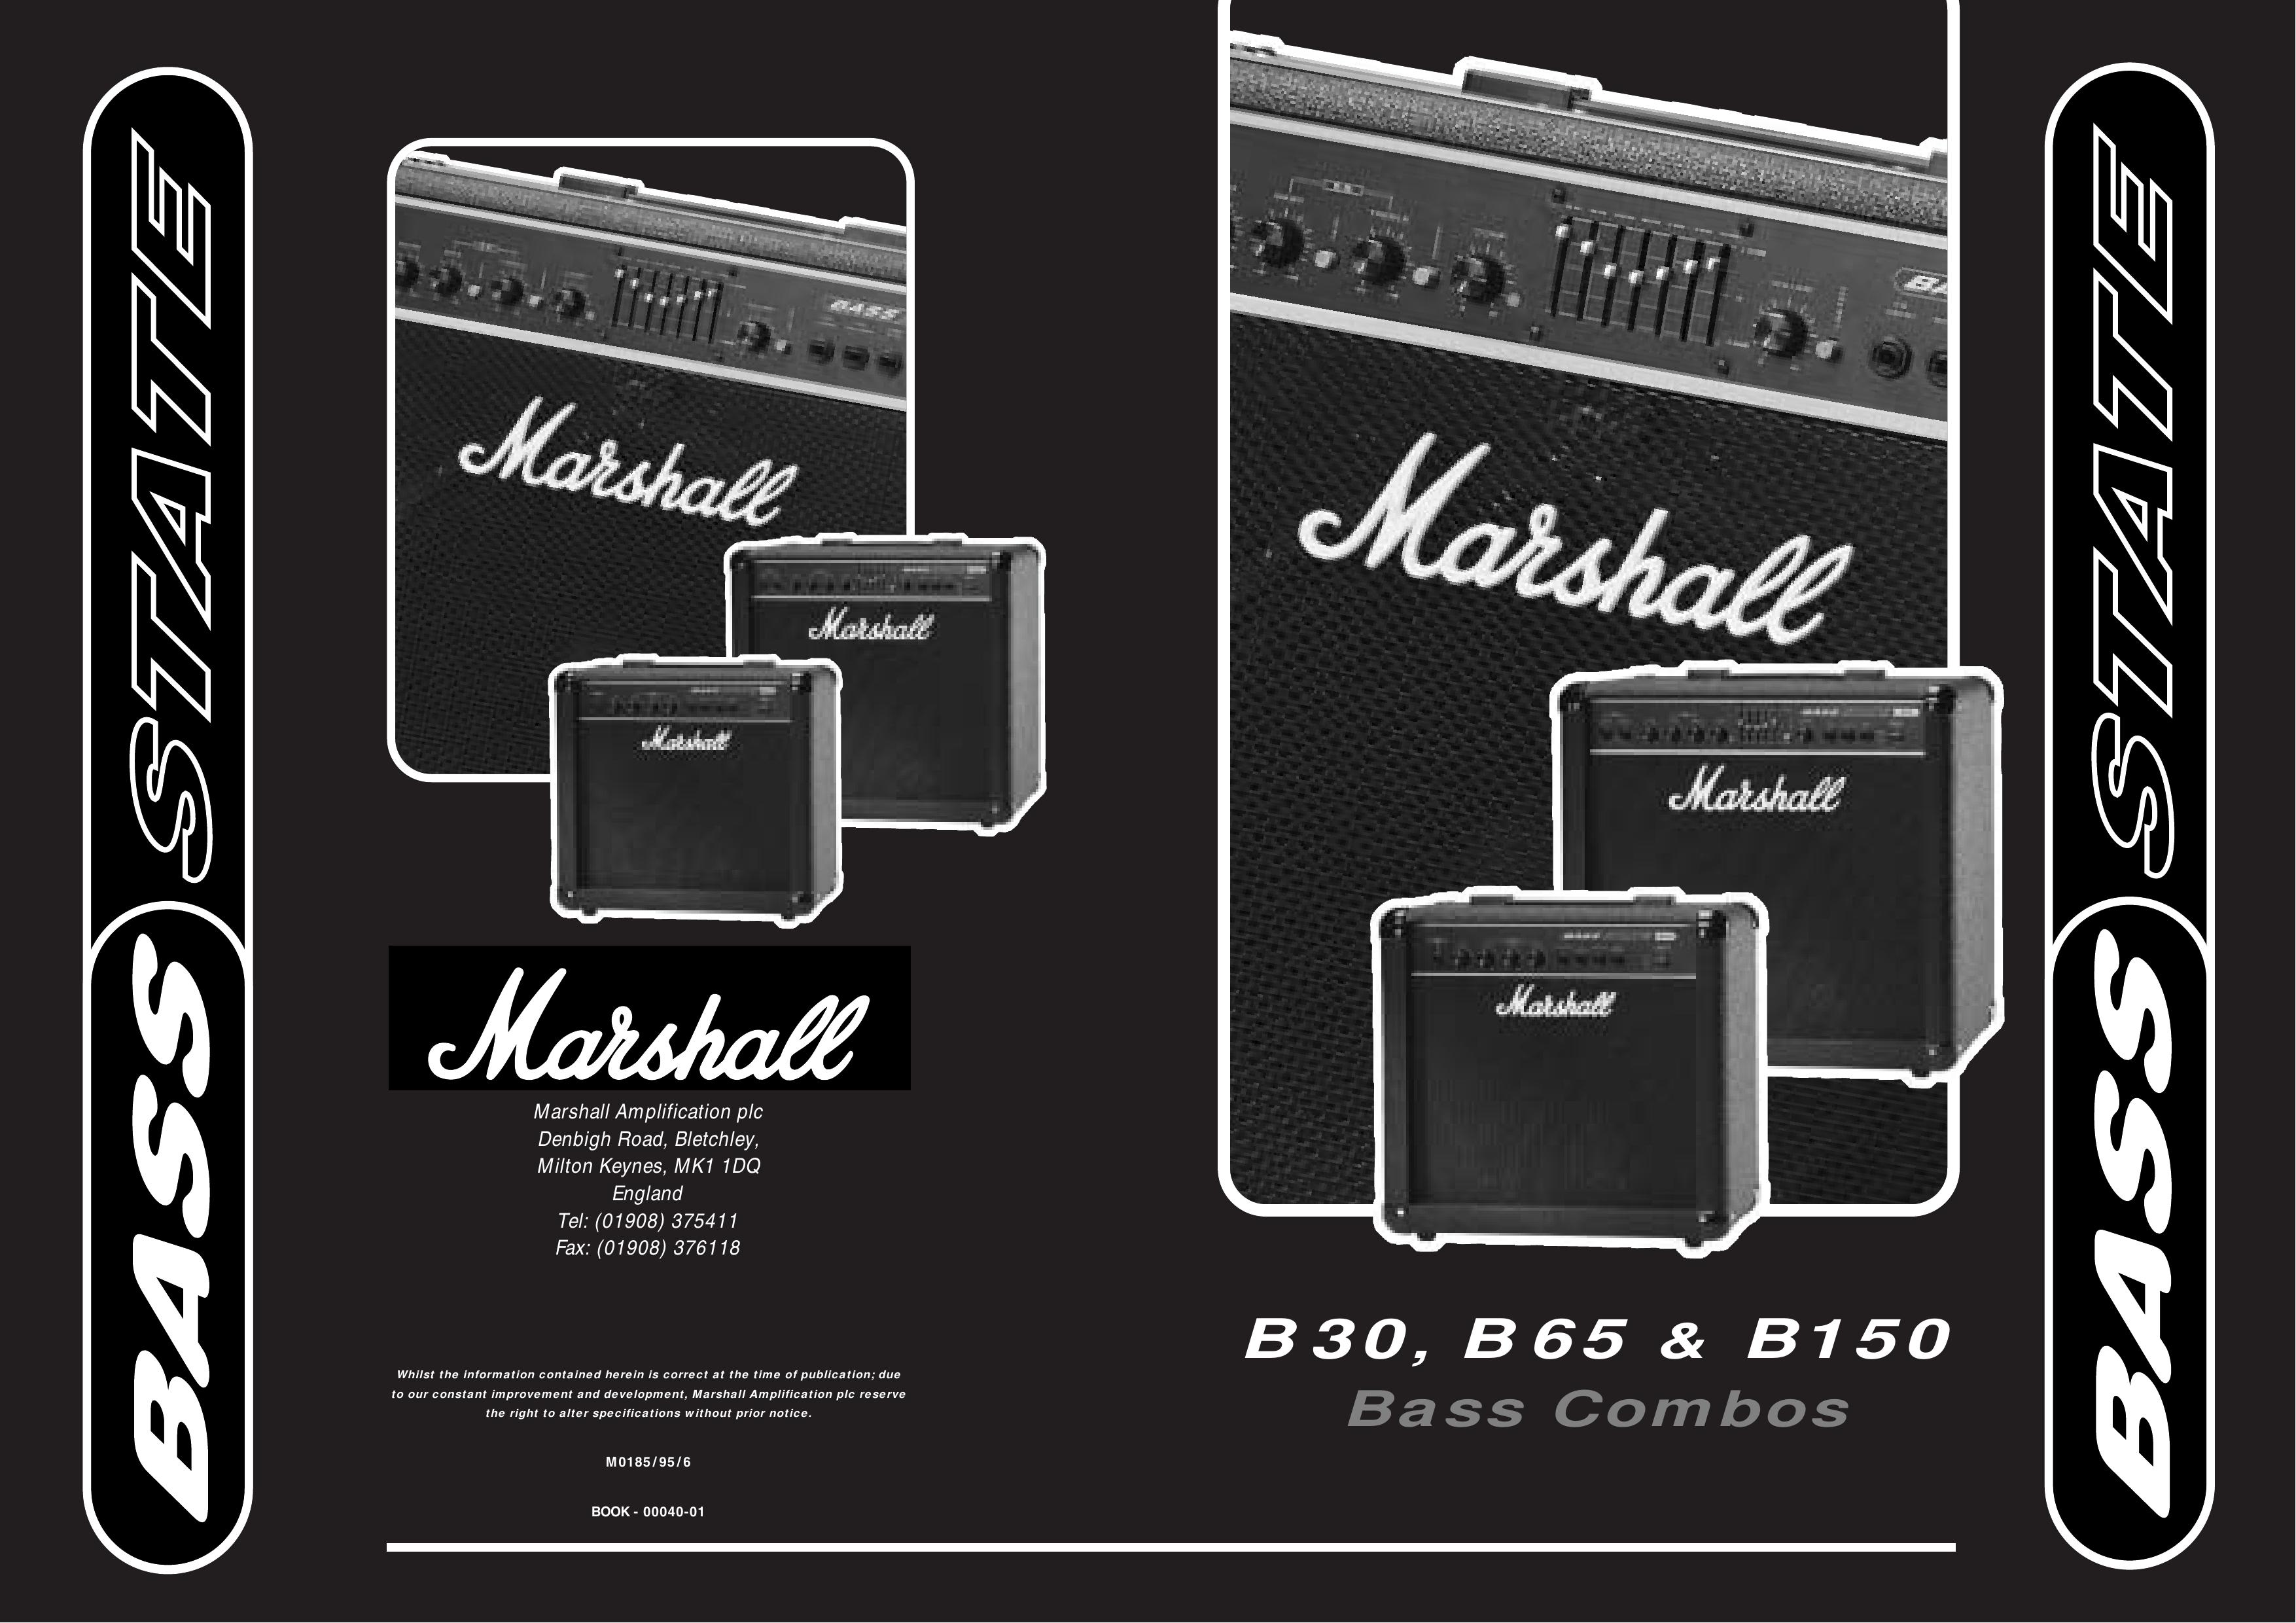 Marshall Amplification B 65 Musical Instrument Amplifier User Manual